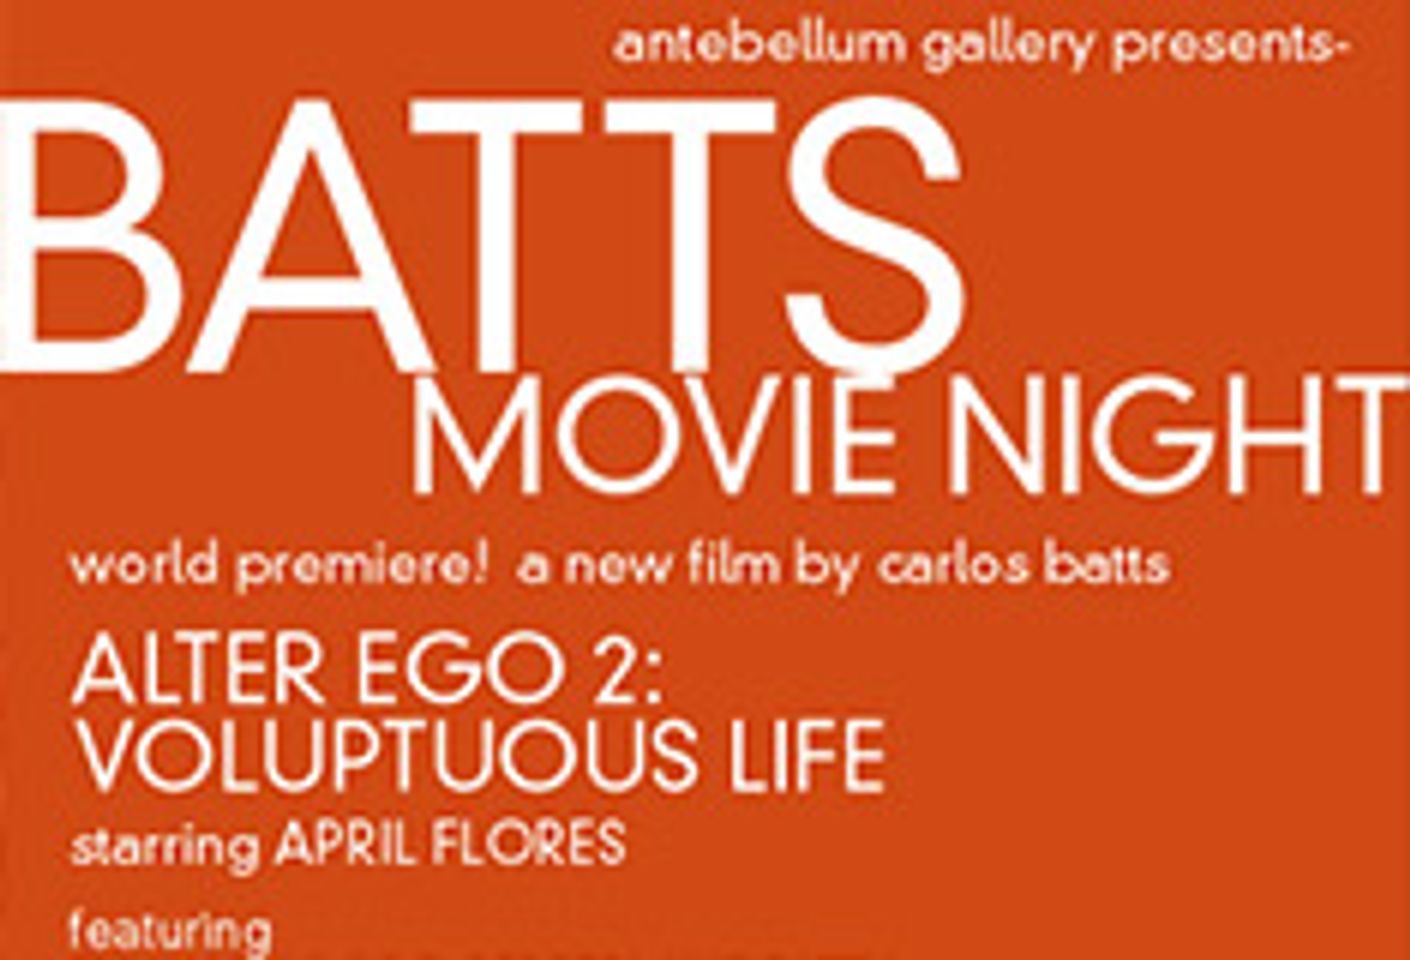 <i>Alter Ego 2</i> to Premiere at Batts Movie Night